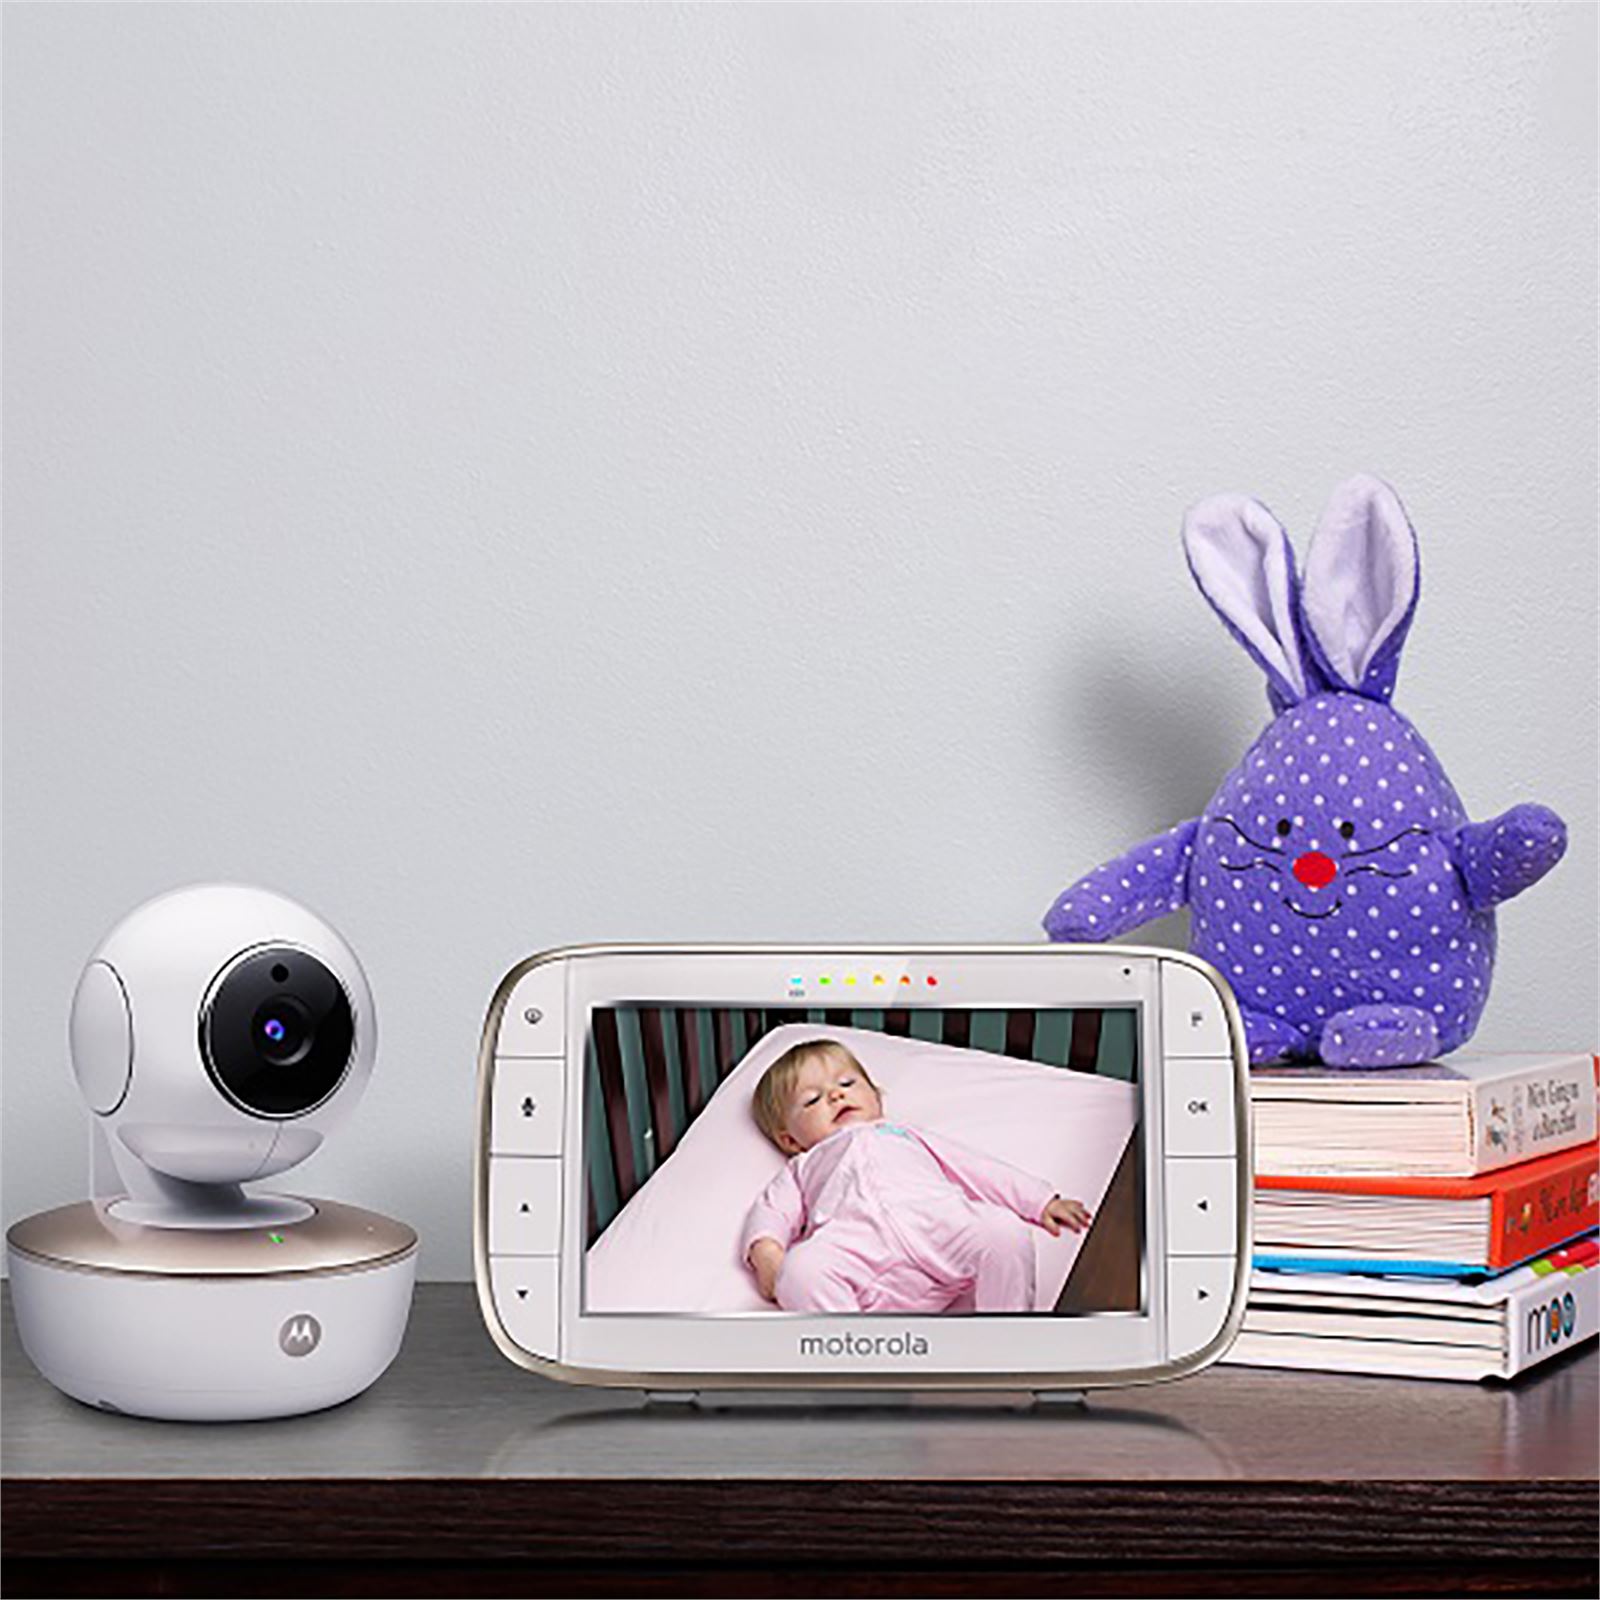 Motorola MBP 36 XL 5 inç LCD Ekran Dijital Pilli Bebek Kamerası